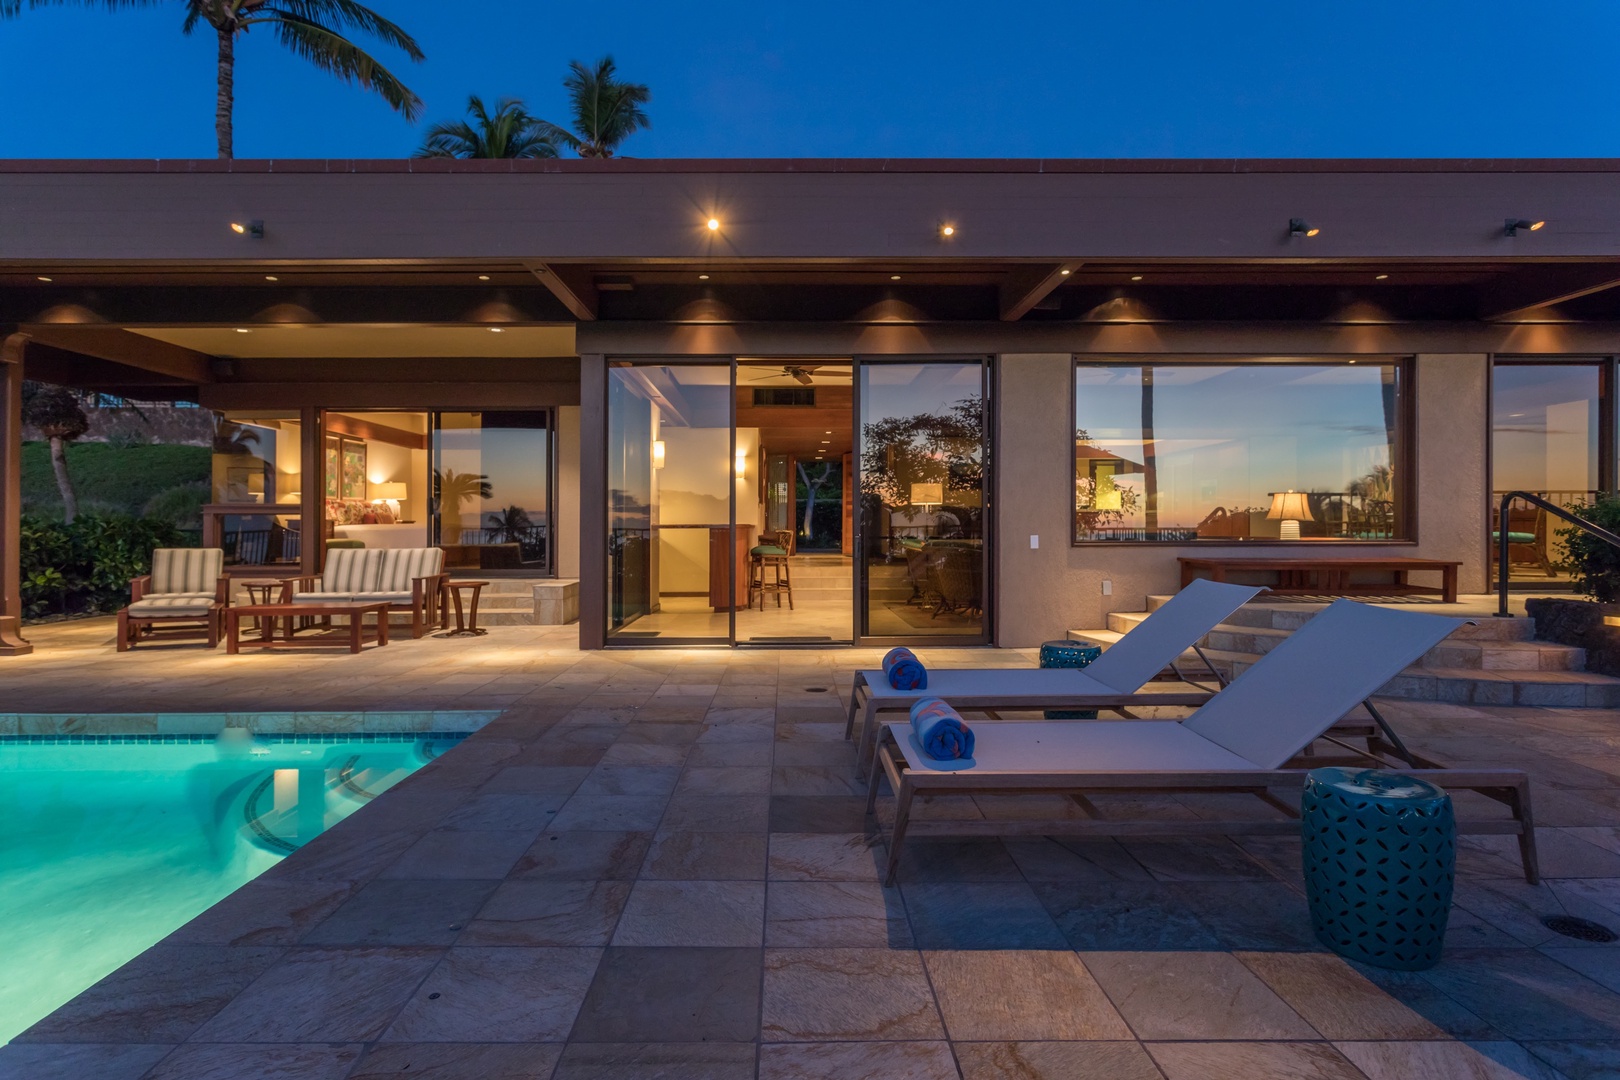 Kamuela Vacation Rentals, 4BD Villas (21) at Mauna Kea Resort - Reverse View of this Elegant Luxury Home at Sunset.